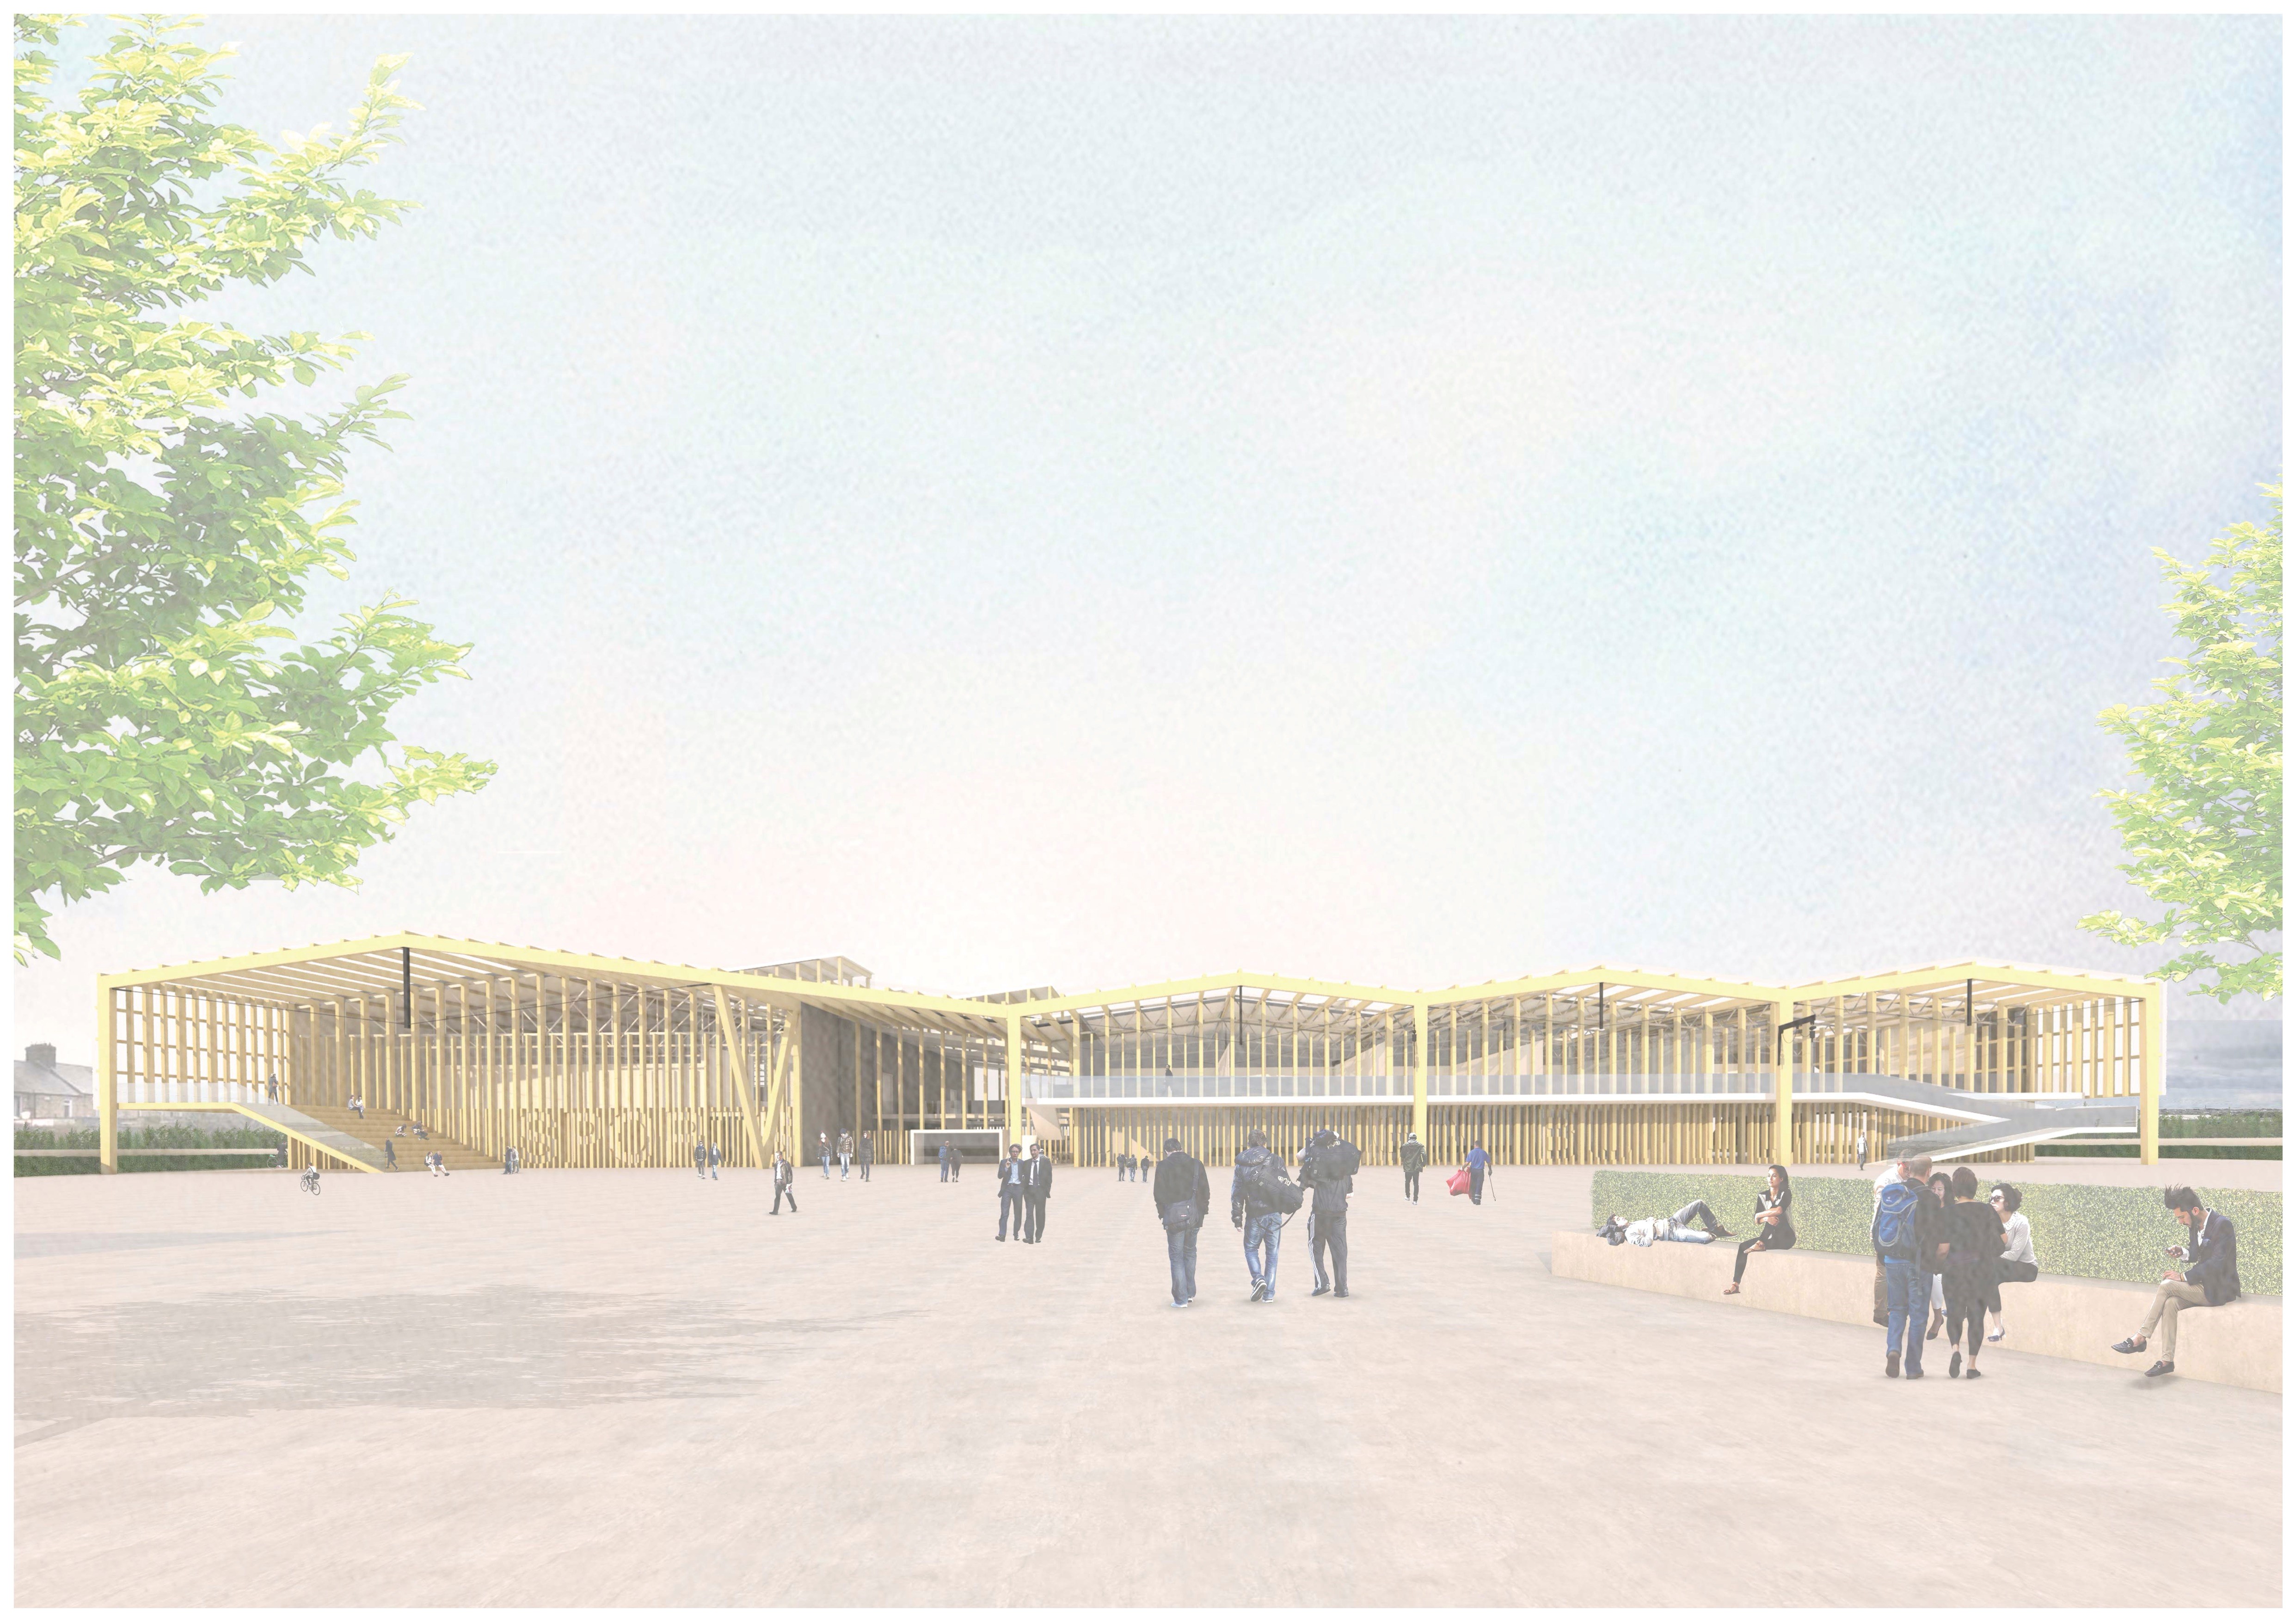 Wavin Ireland looks to the future through its support of TU Dublin’s Design + Construct Centre at Broombridge